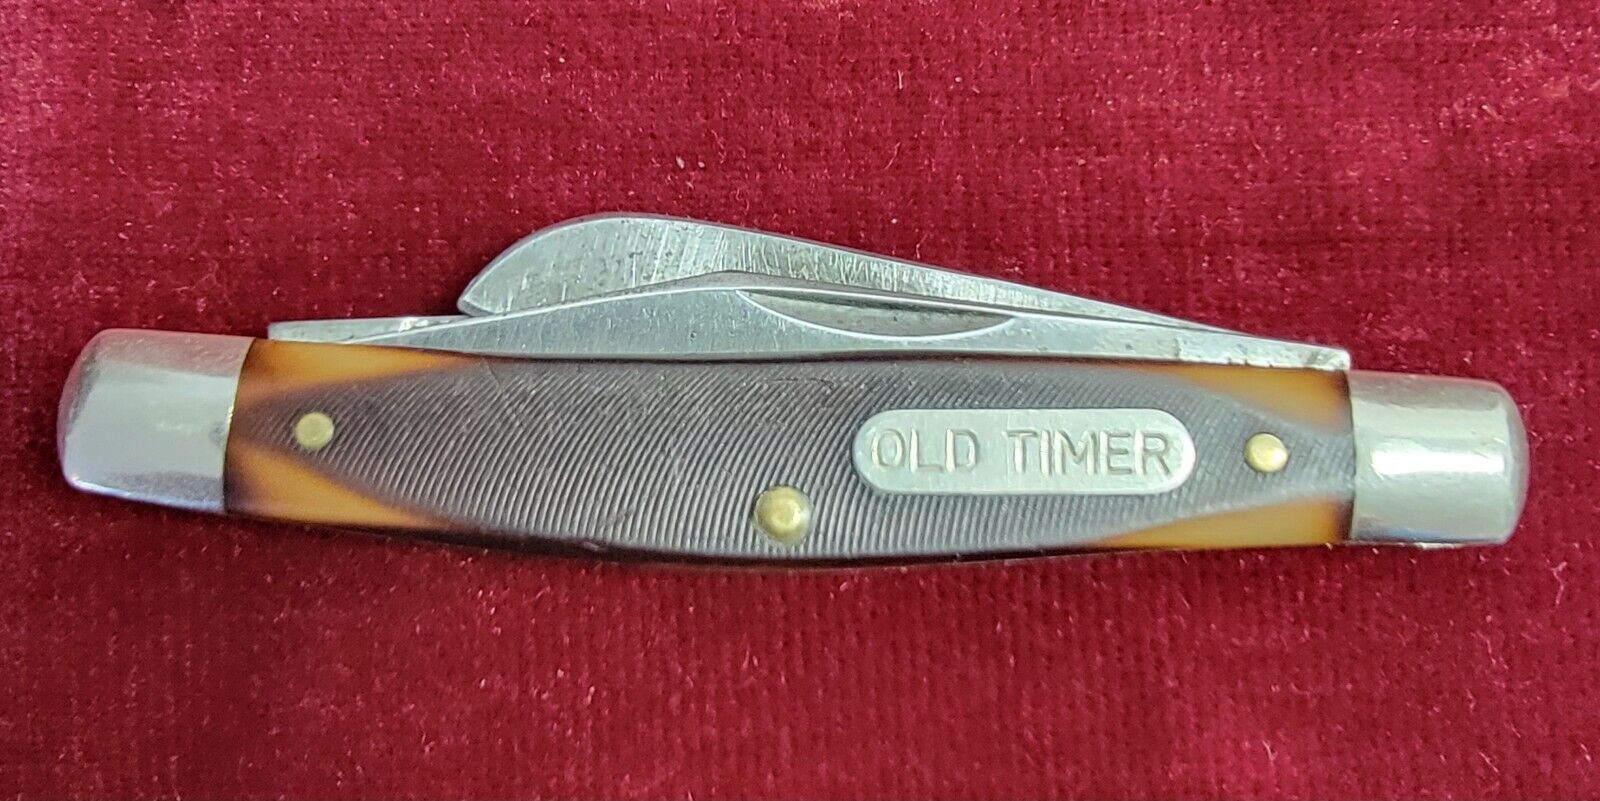 Schrade N.Y. USA 340T  Old Timer 3 Blade Pocket Knife  Good condition